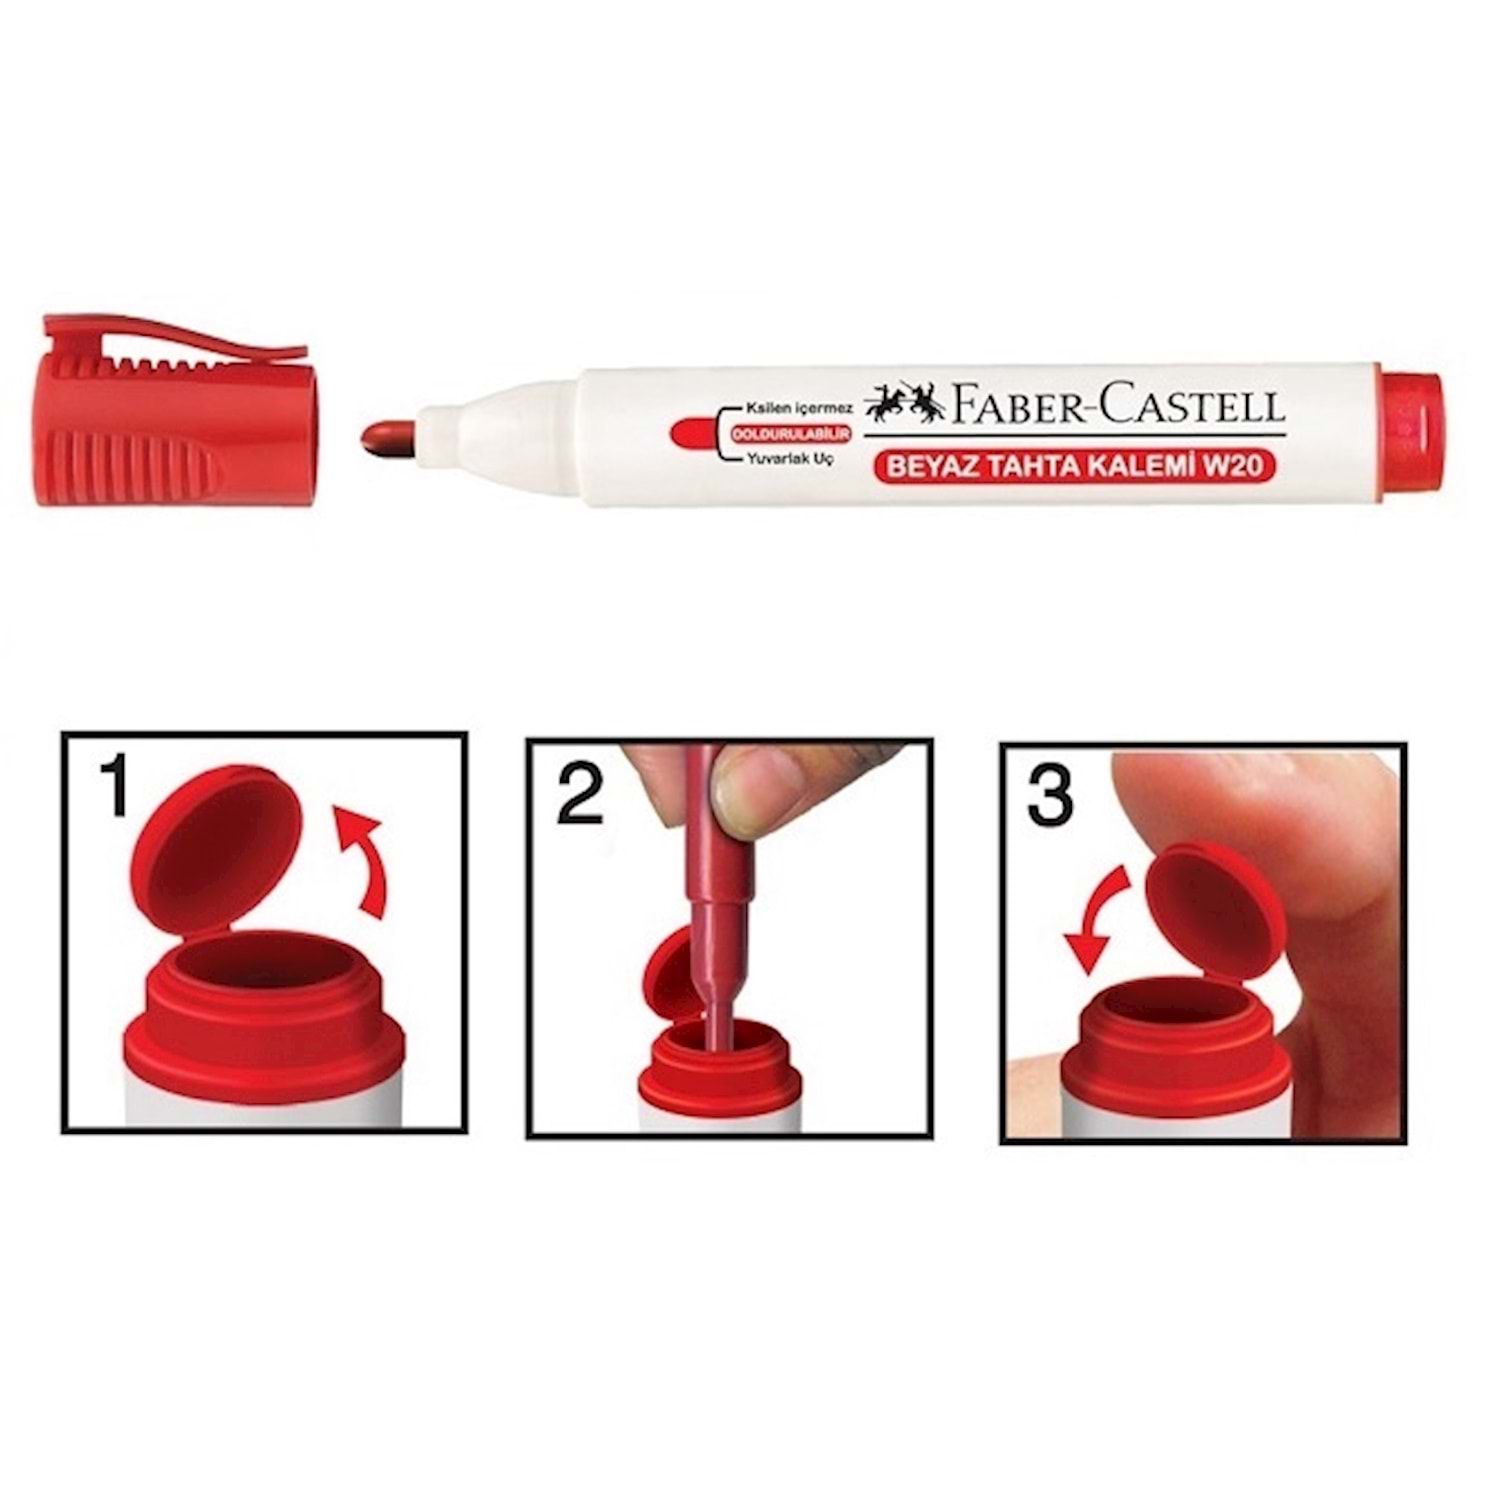 Faber Castell Beyaz Tahta Kalemi W20 Kırmızı